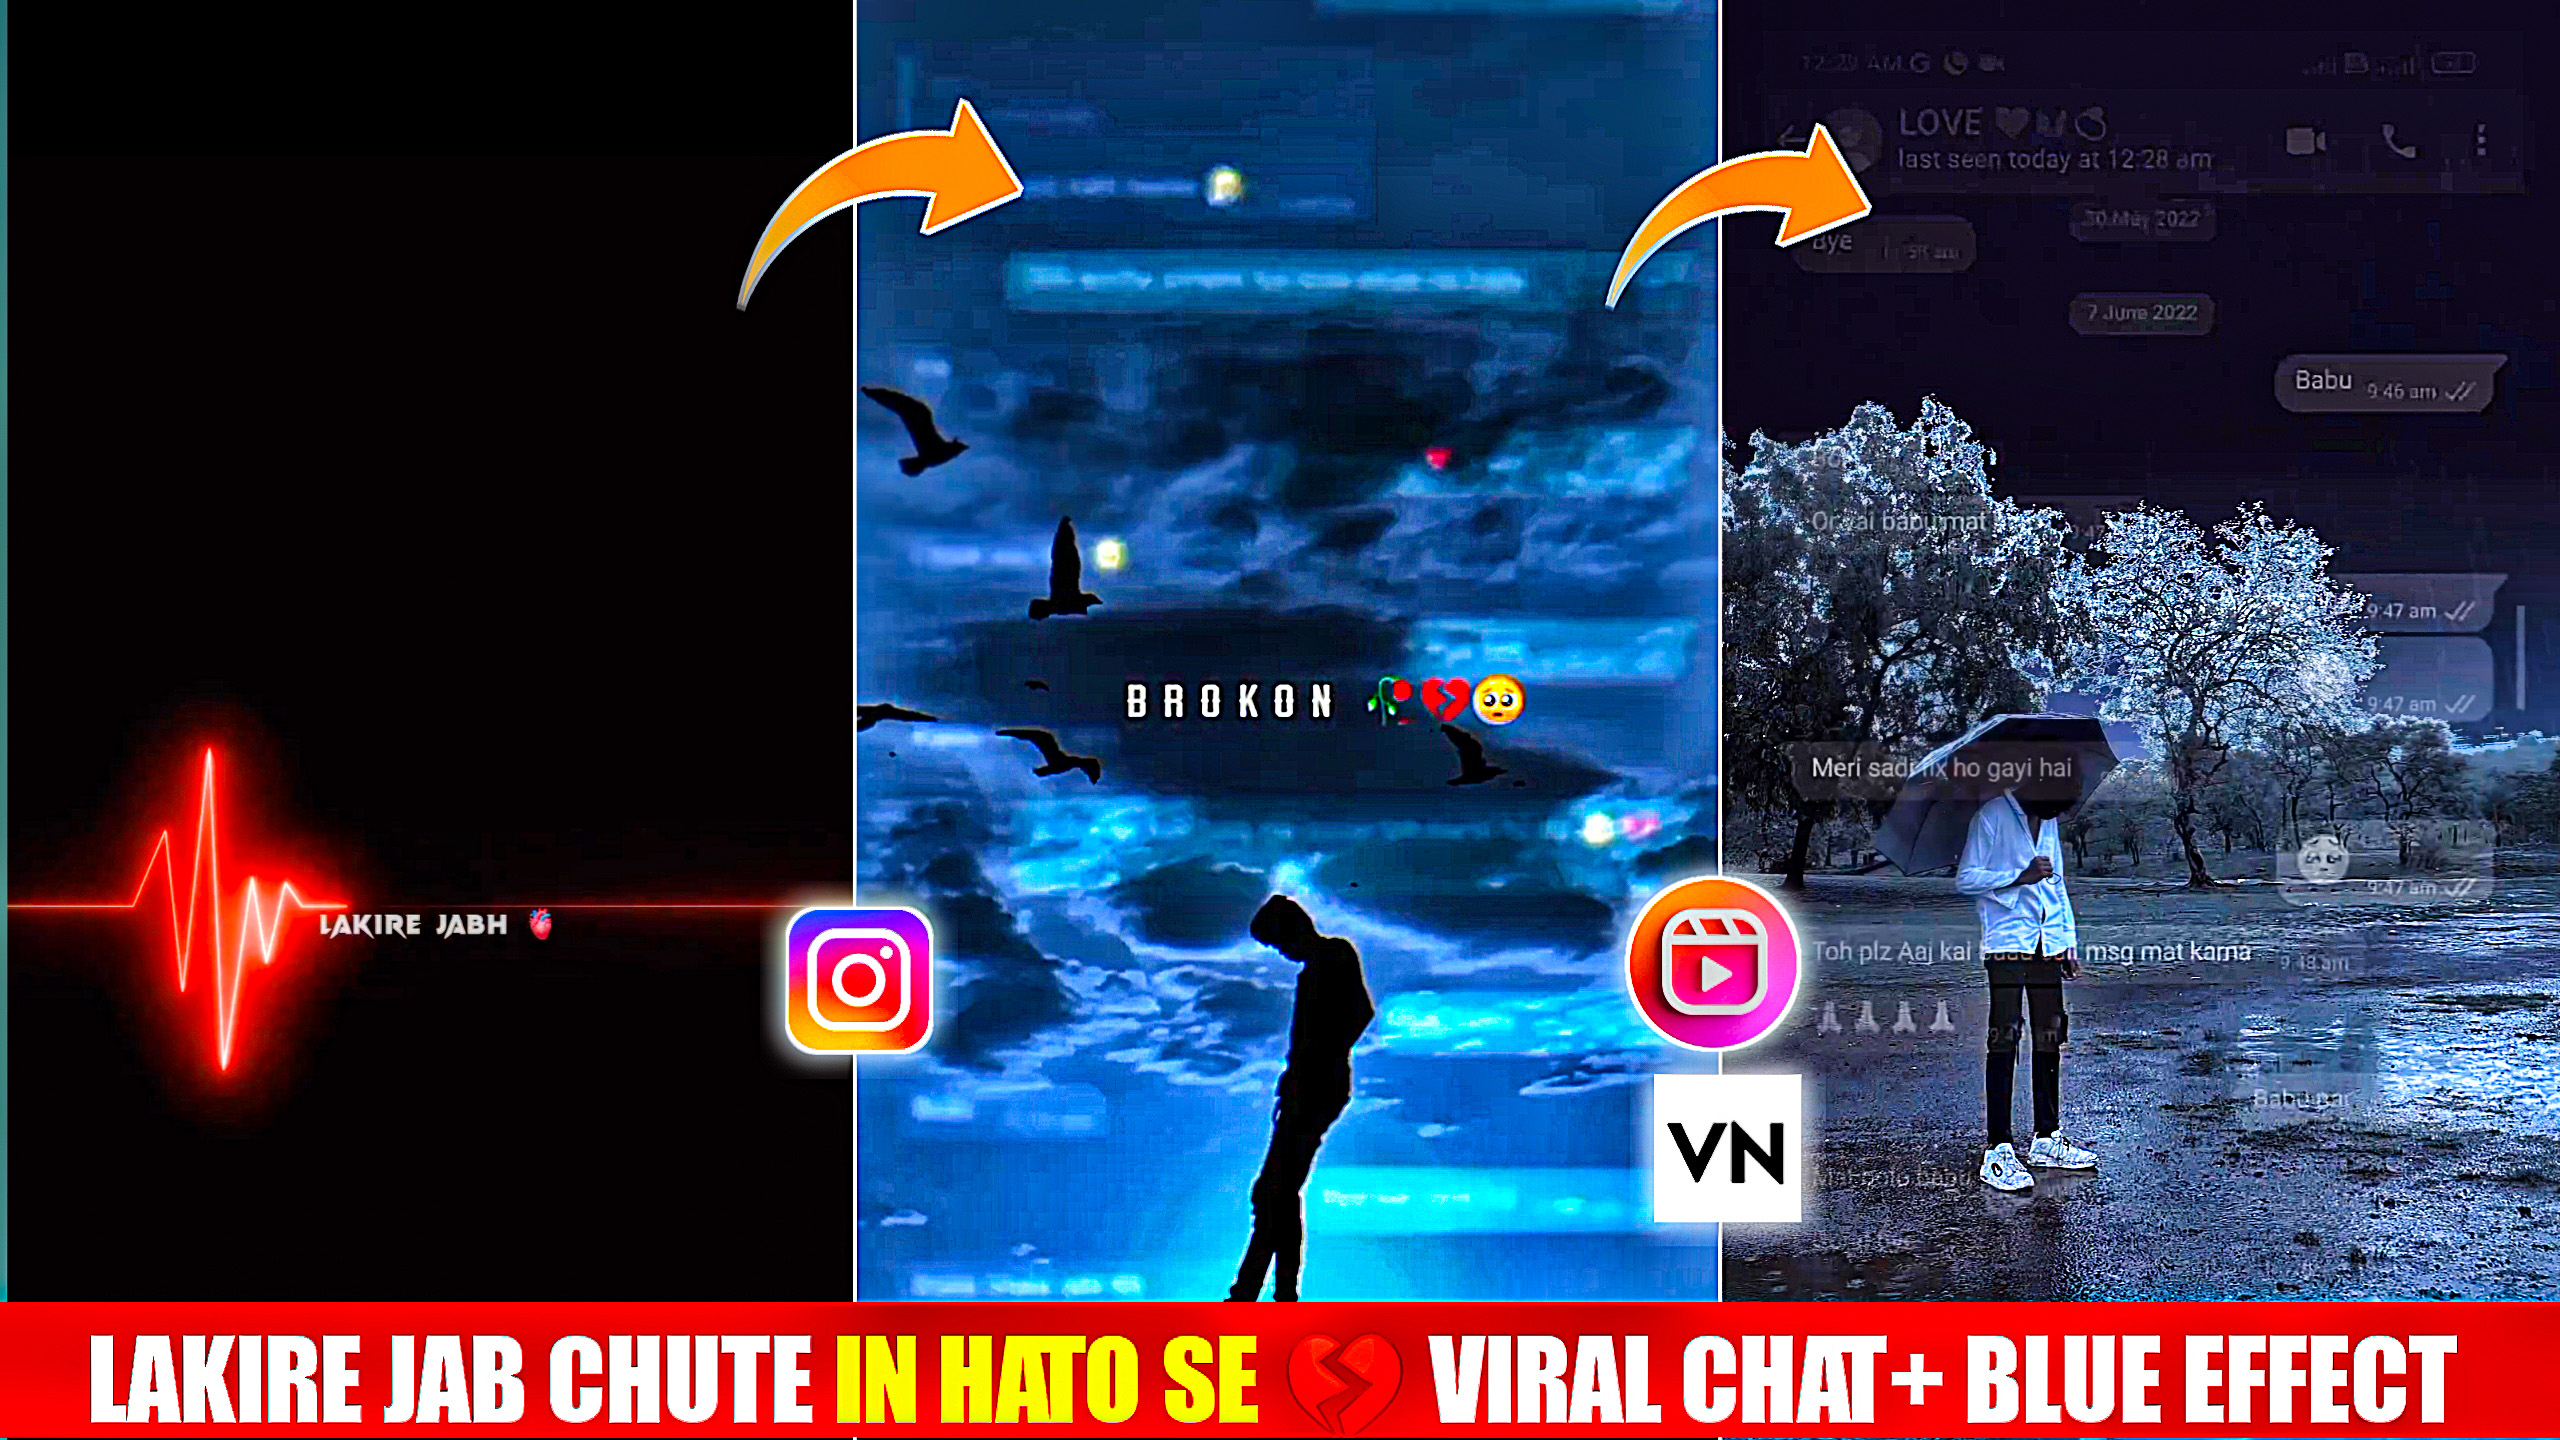 lakiren jab chute in hato se lyrics trending sky change video editing viral chat + blue tone